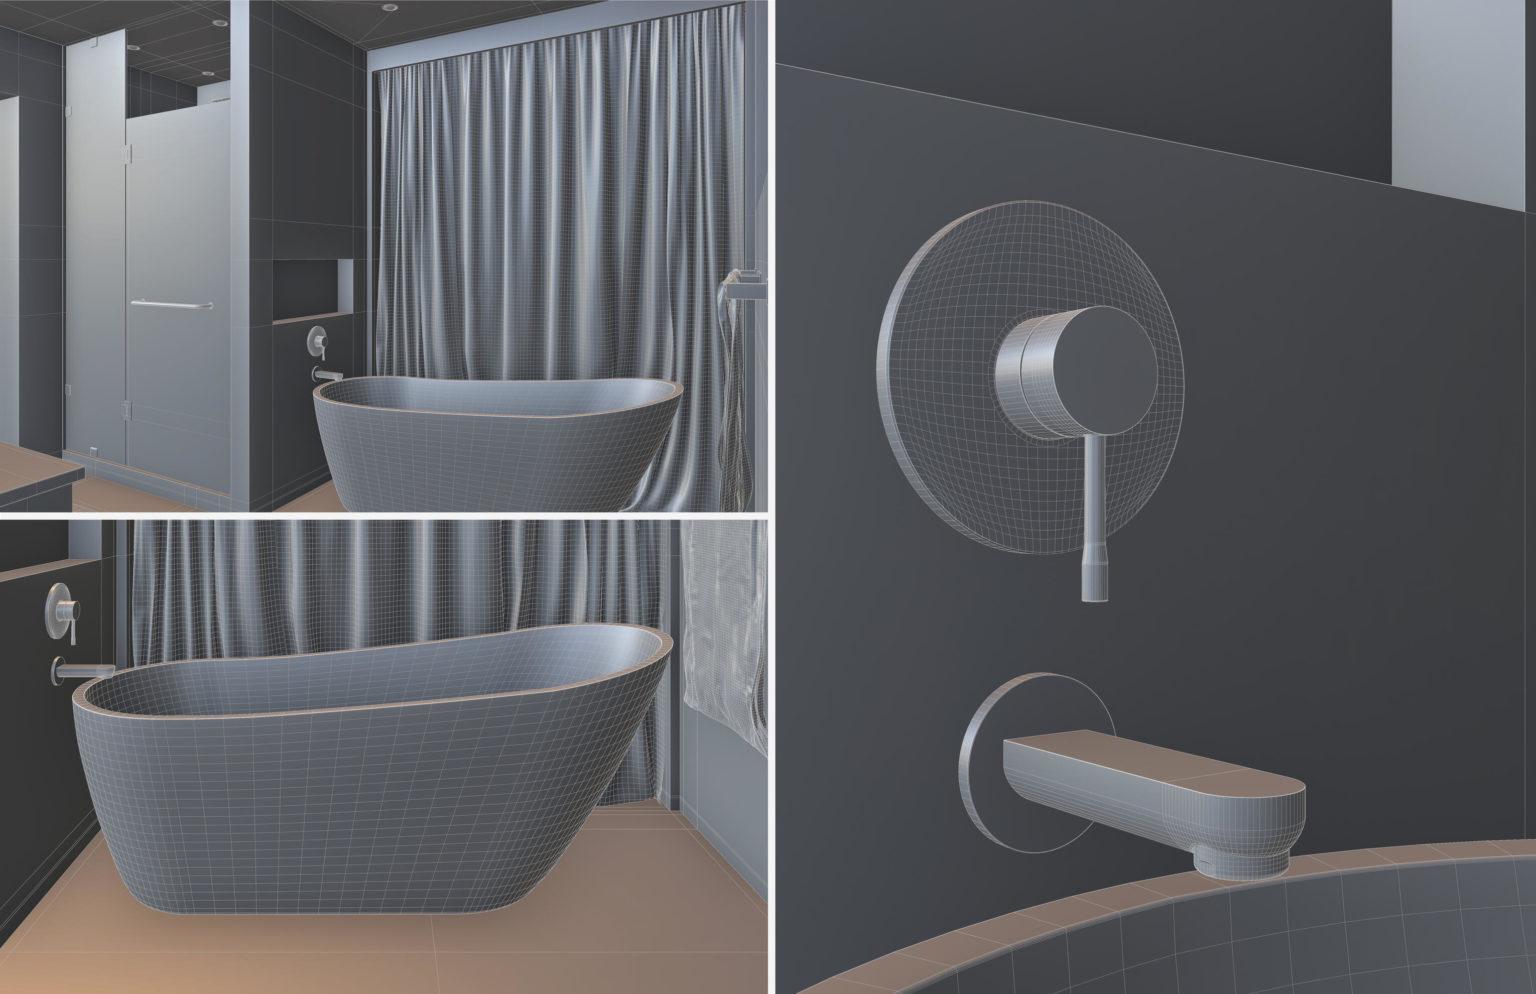 Michal Dziewiatkowski, Bathroom Space - Interior and Product Rendering - Wireframe